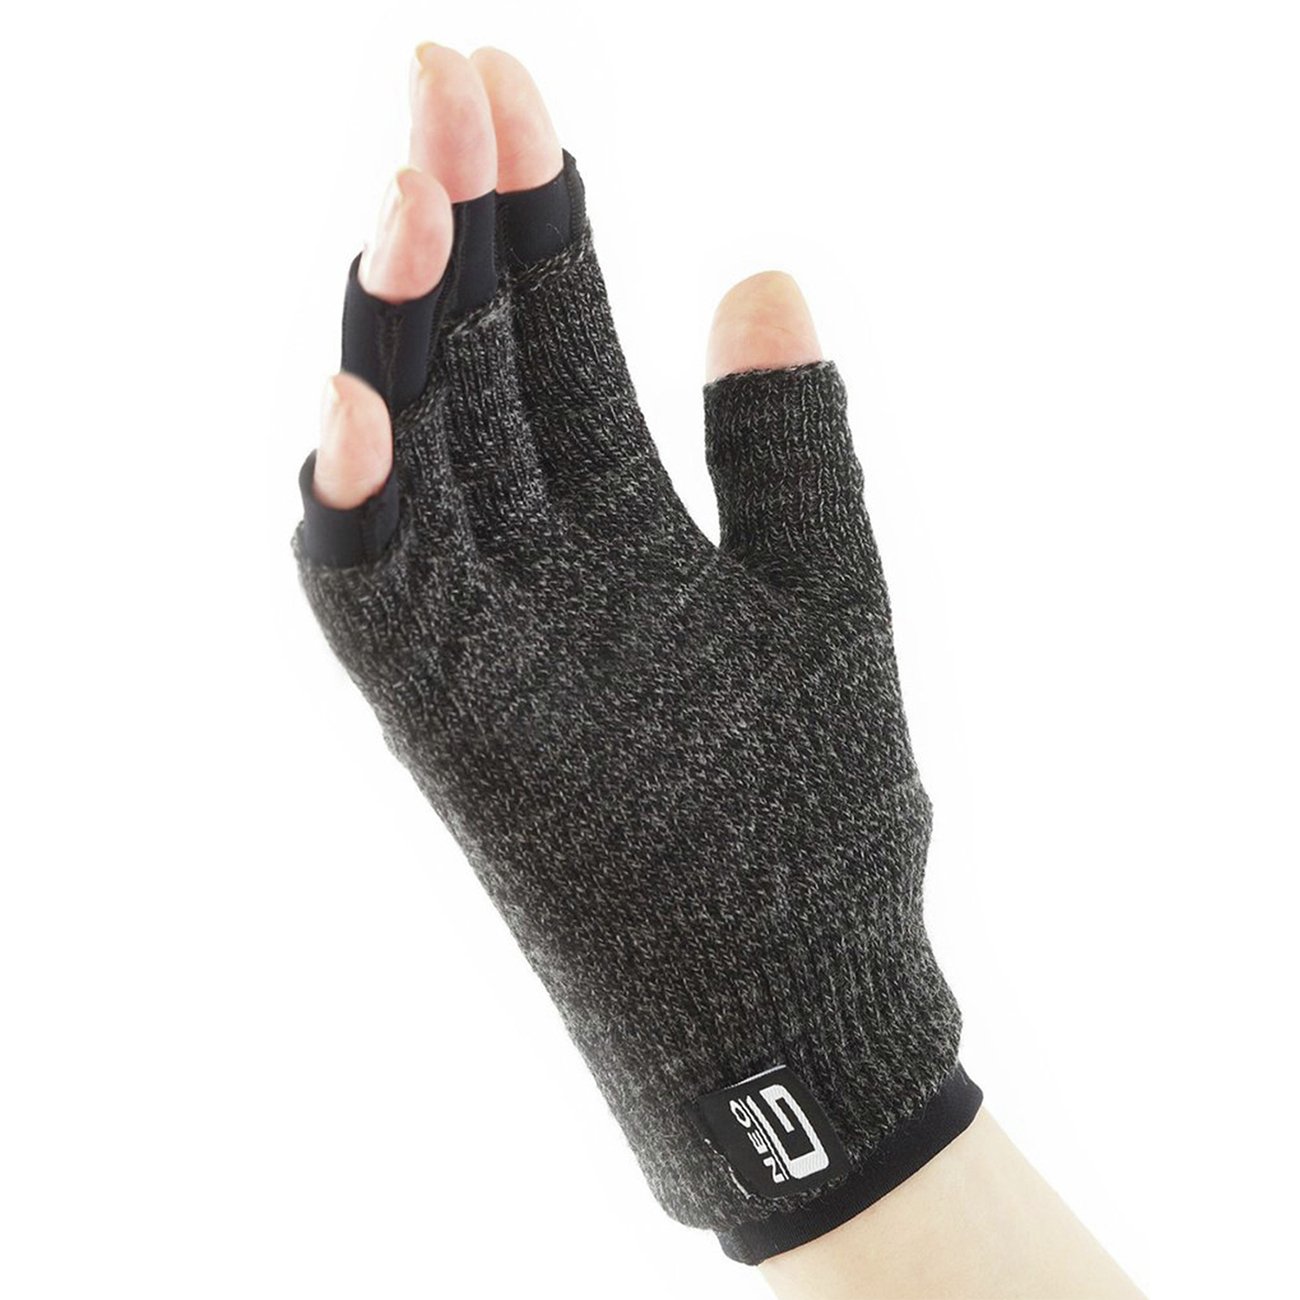 Neo G Pair of Comfort Relief Arthritis Gloves - Large